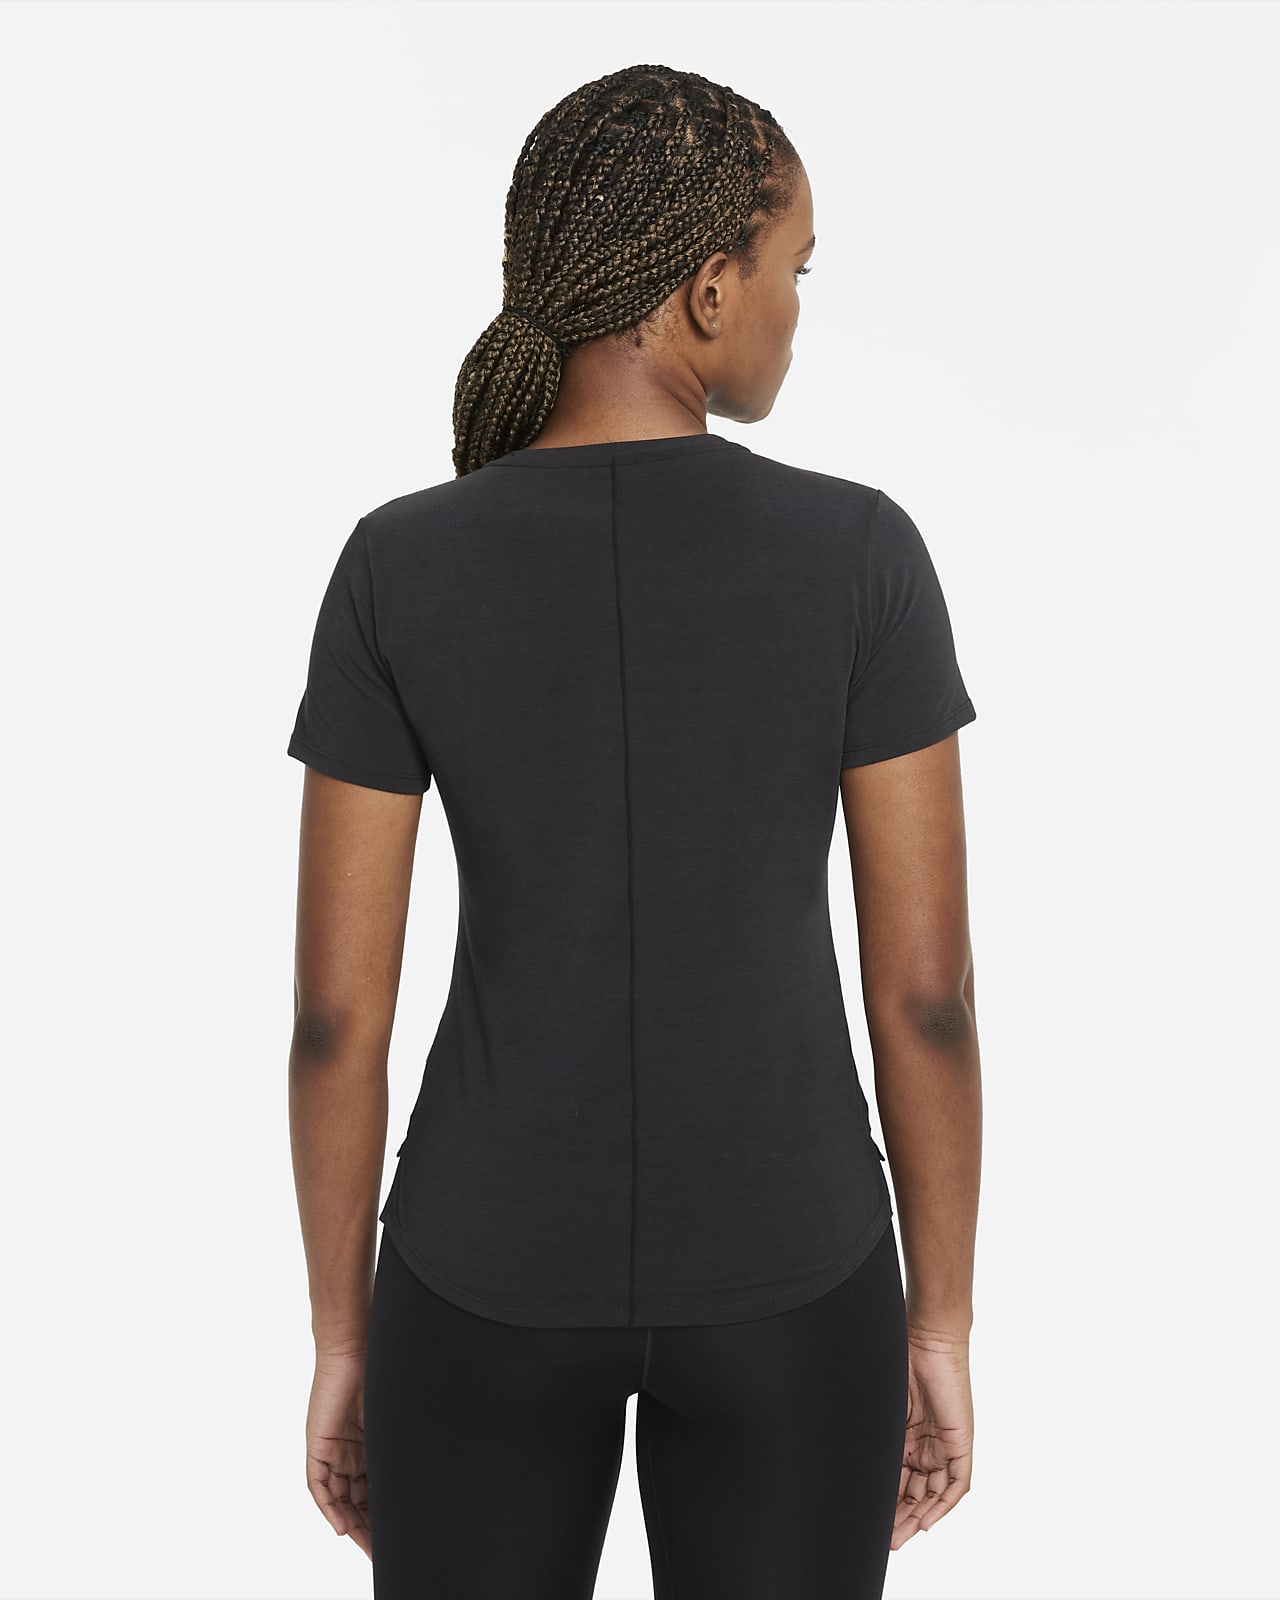 Women\'s Fit Short-Sleeve Nike Top. Standard One Luxe UV Dri-FIT